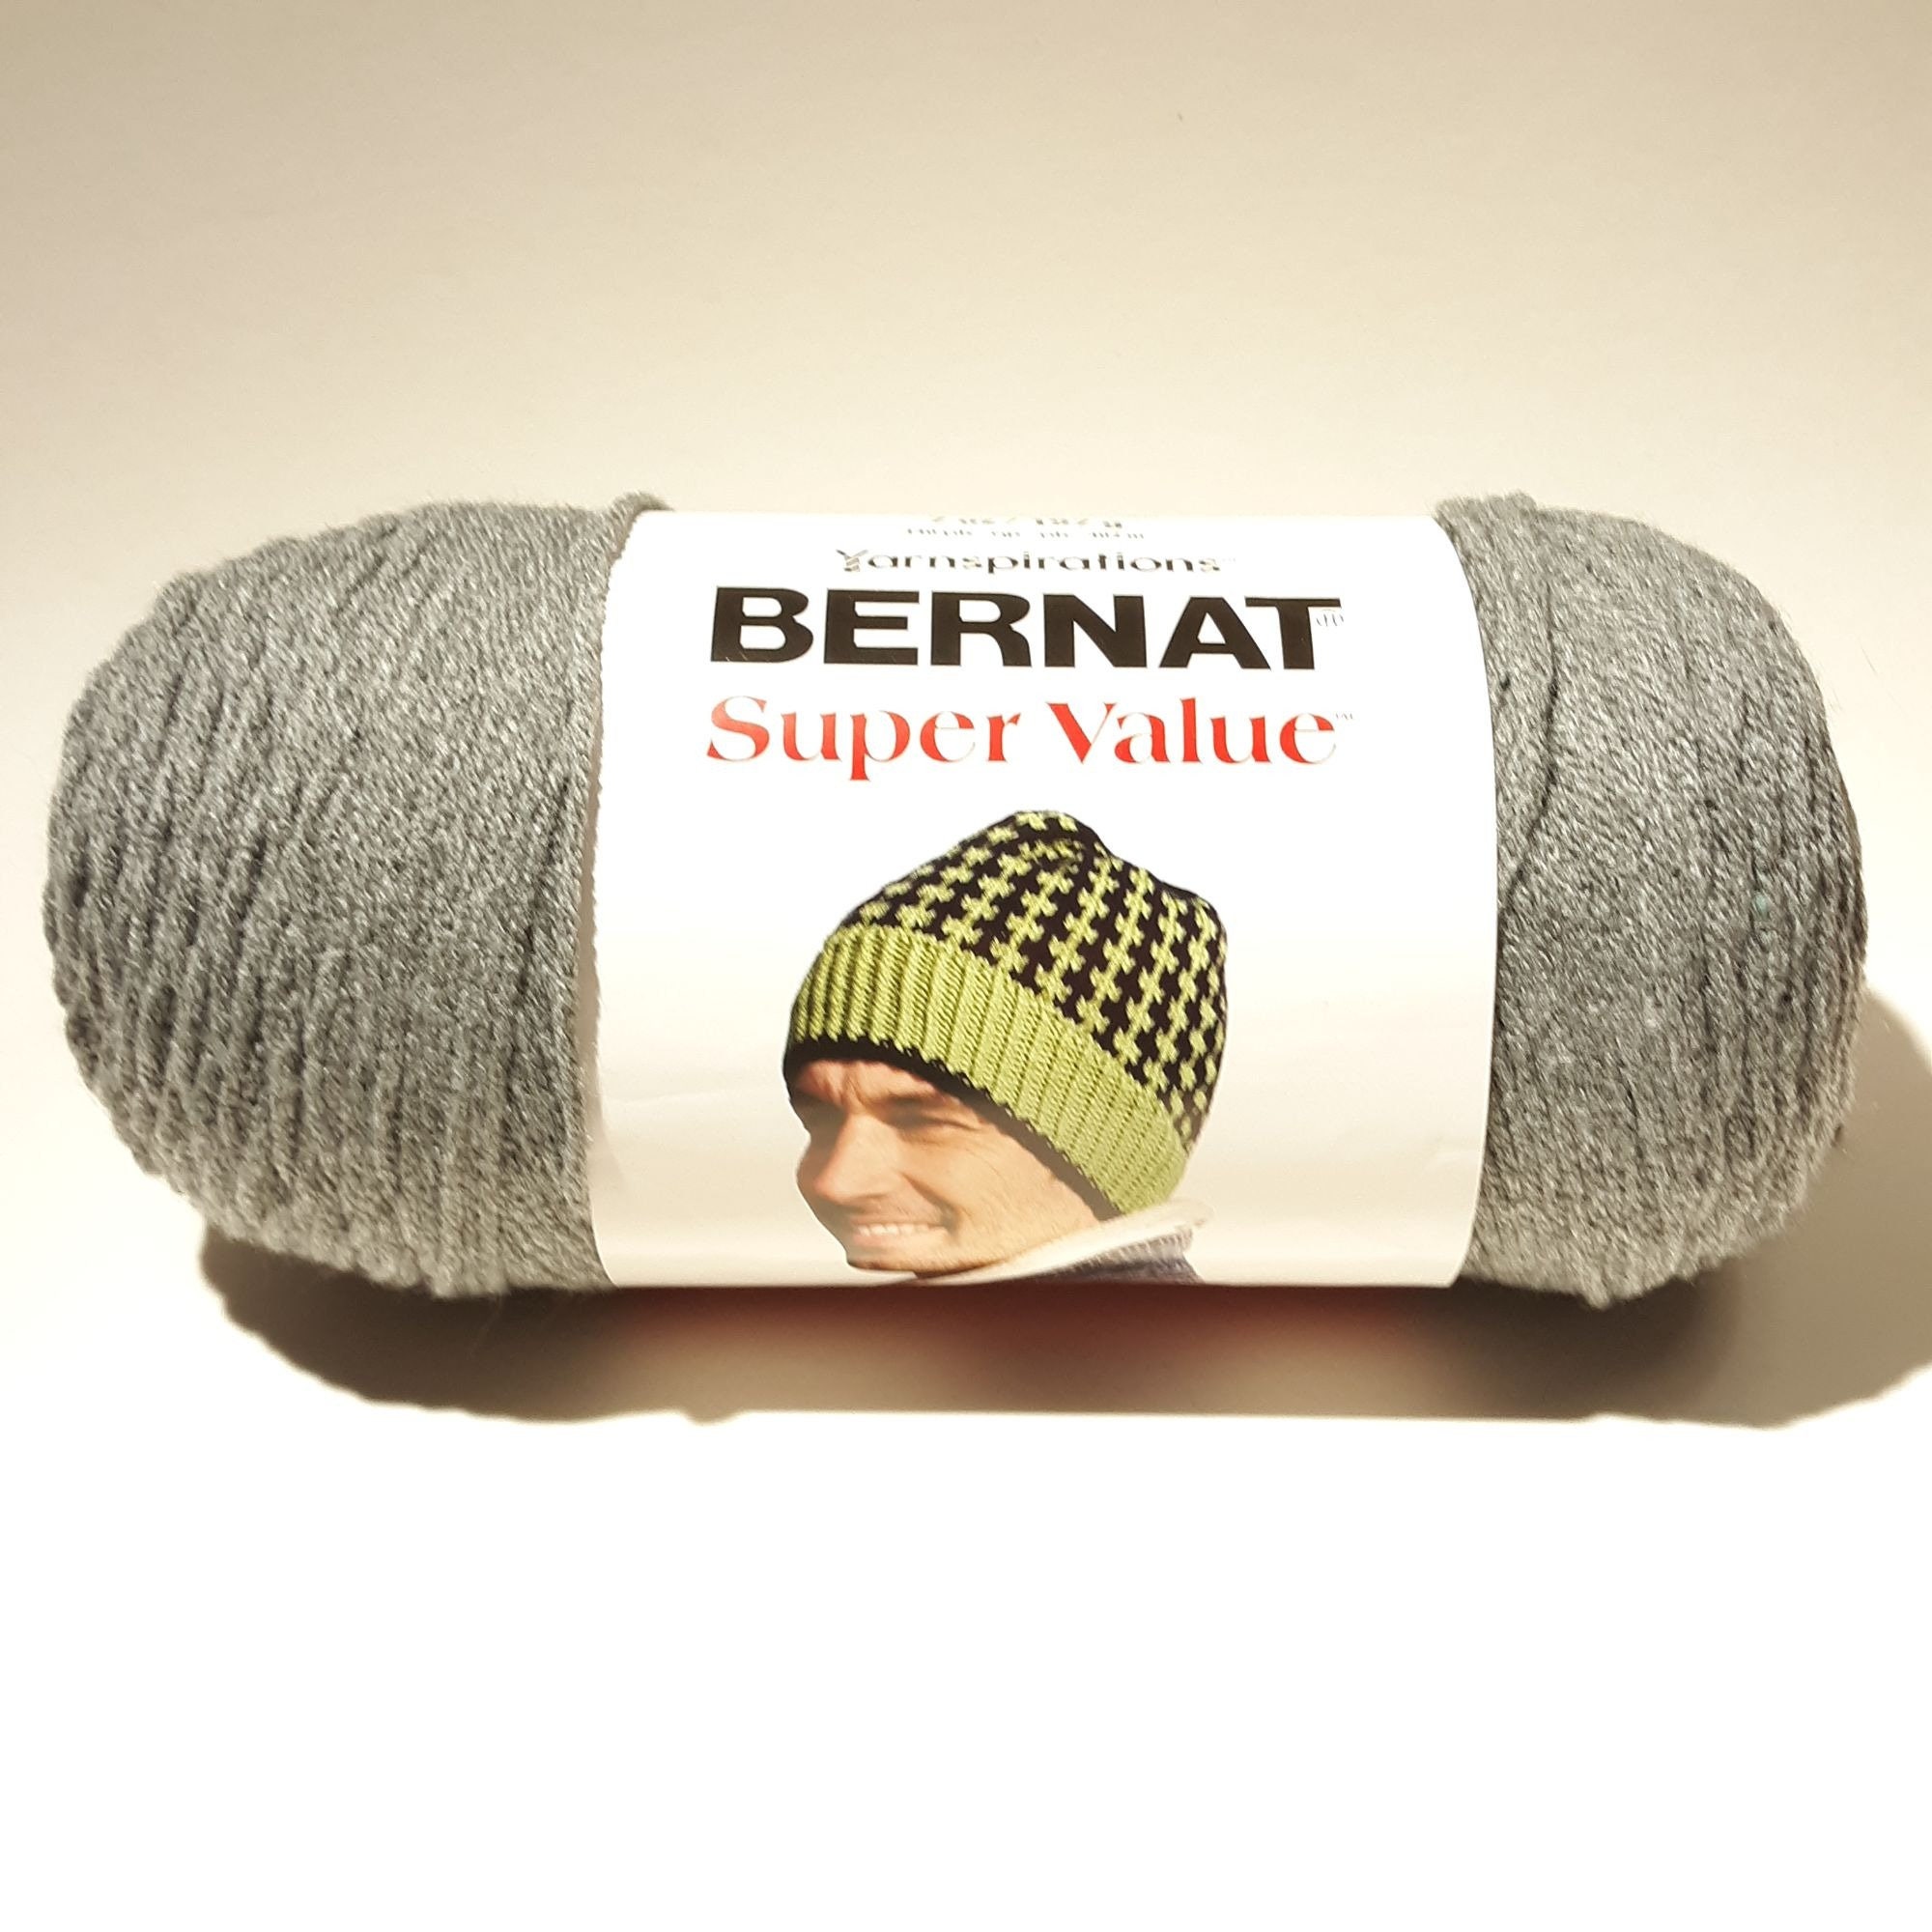 Bernat Super Value Black Yarn - 3 Pack of 198g/7oz - Acrylic - 4 Medium  (Worsted) - 426 Yards - Knitting/Crochet